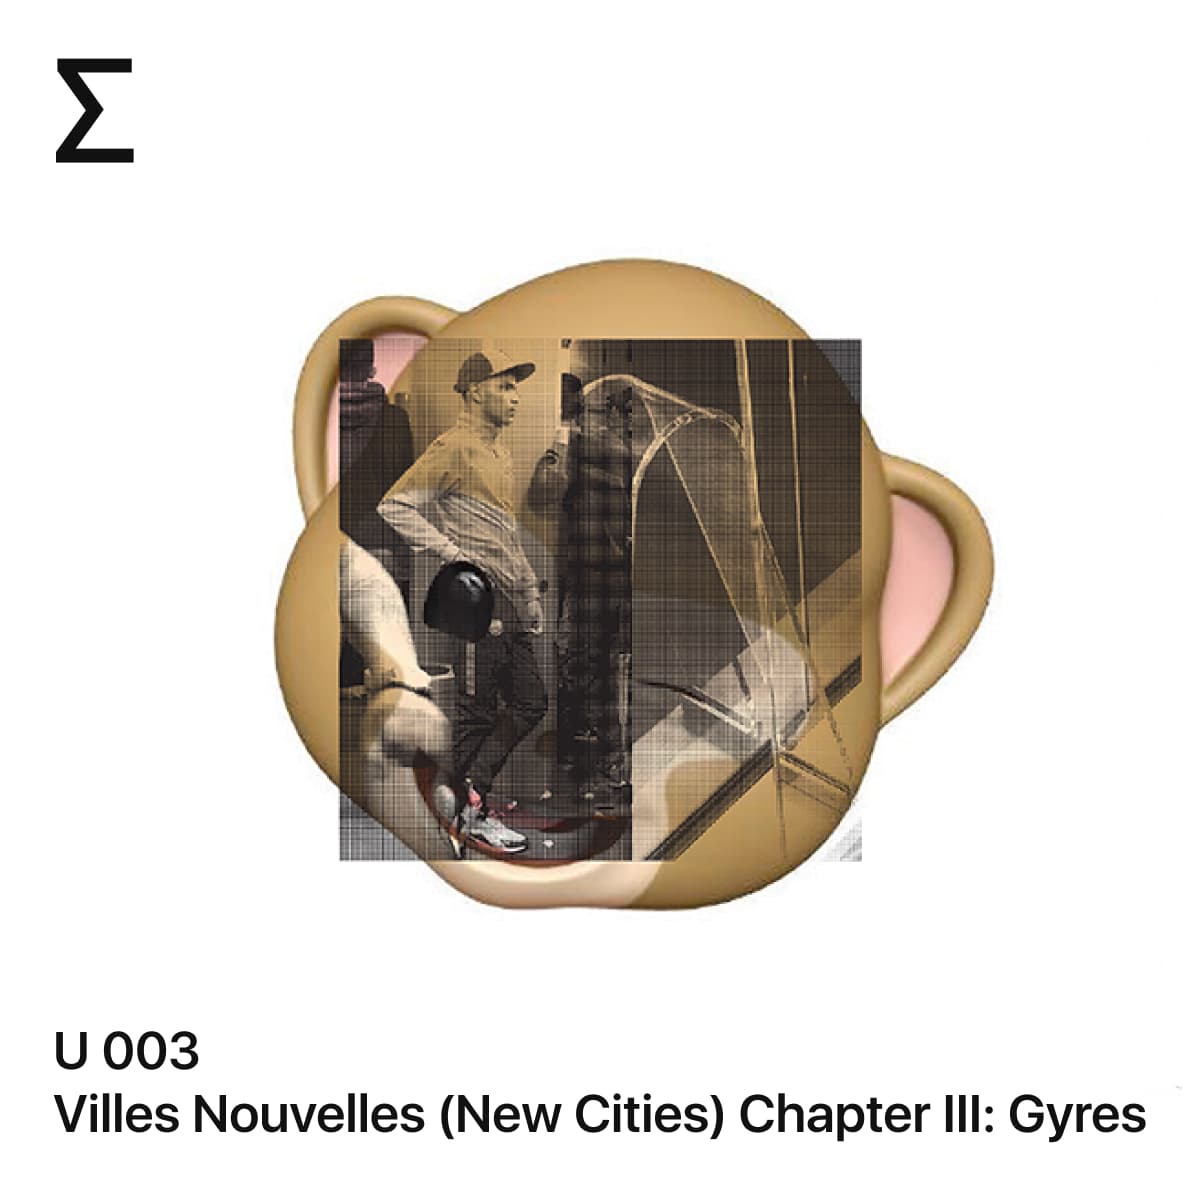 U 003 – Villes Nouvelles (New Cities) Chapter III: Gyres